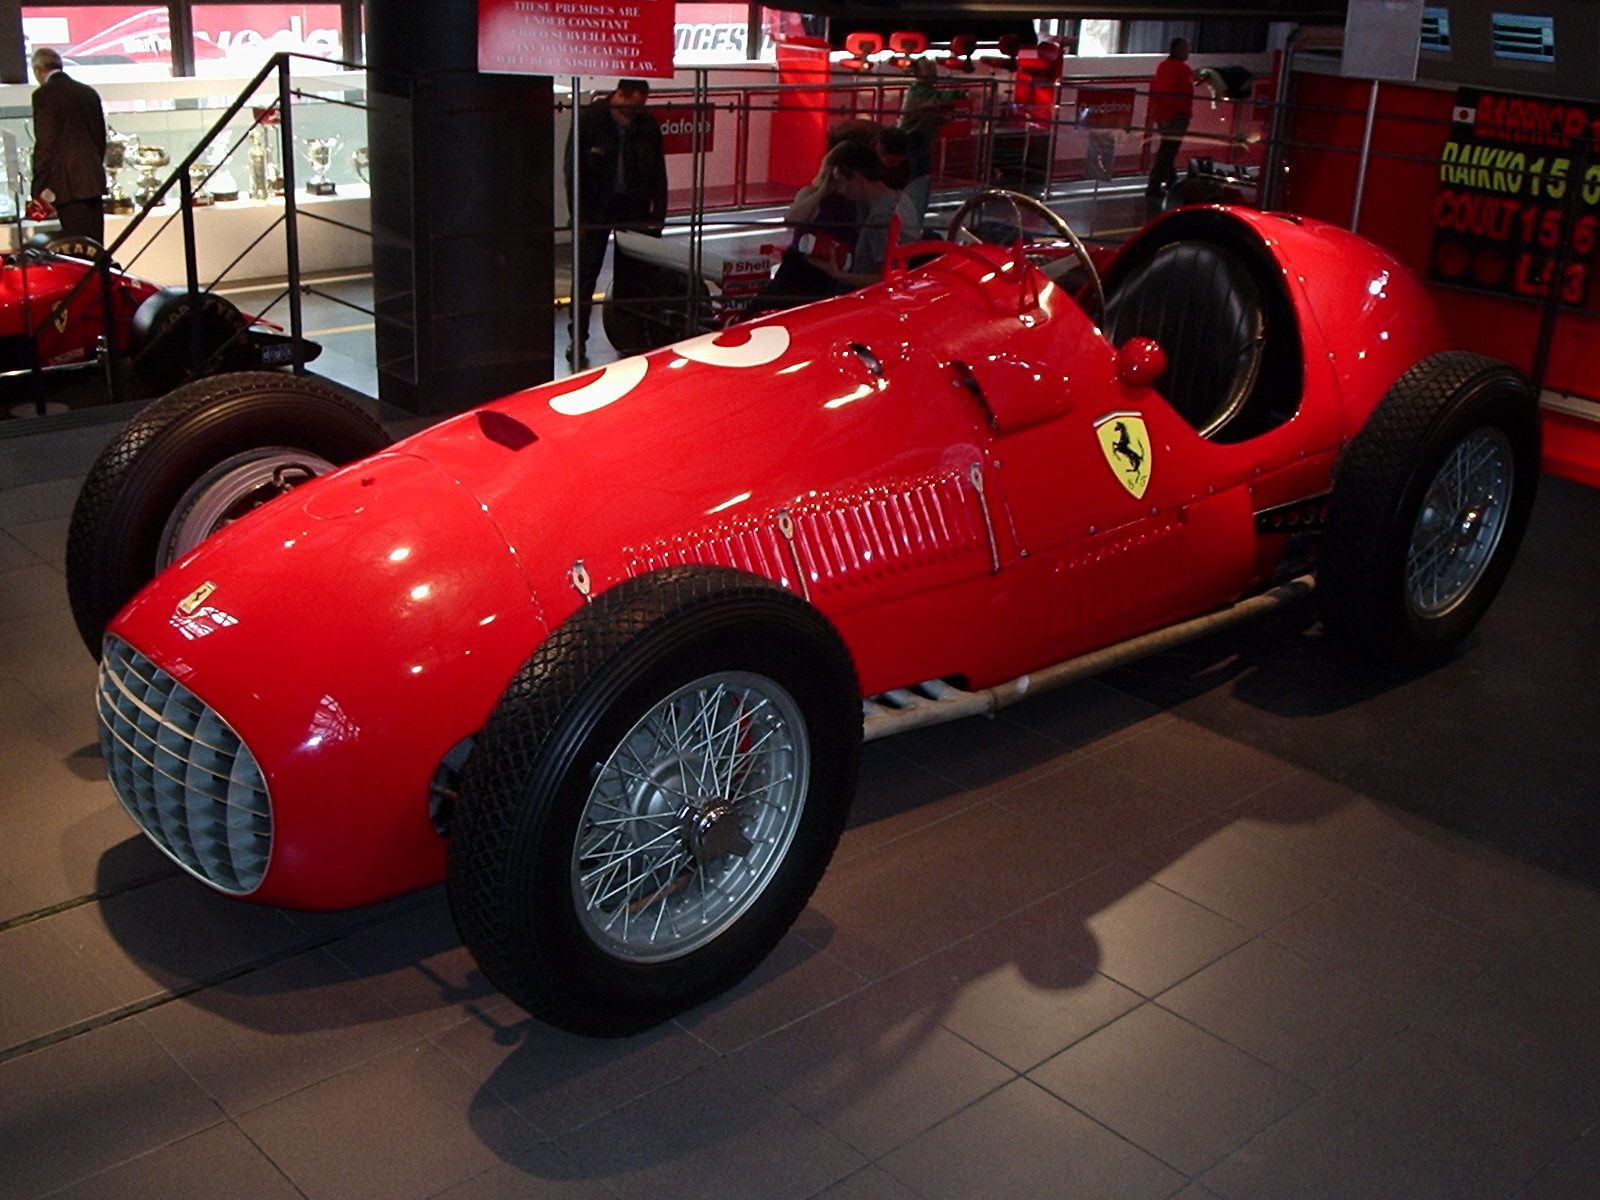 http://a398.idata.over-blog.com/4/15/62/69/Competition-1947-a-1950/-1950--1951--Ferrari-375-F1.jpg